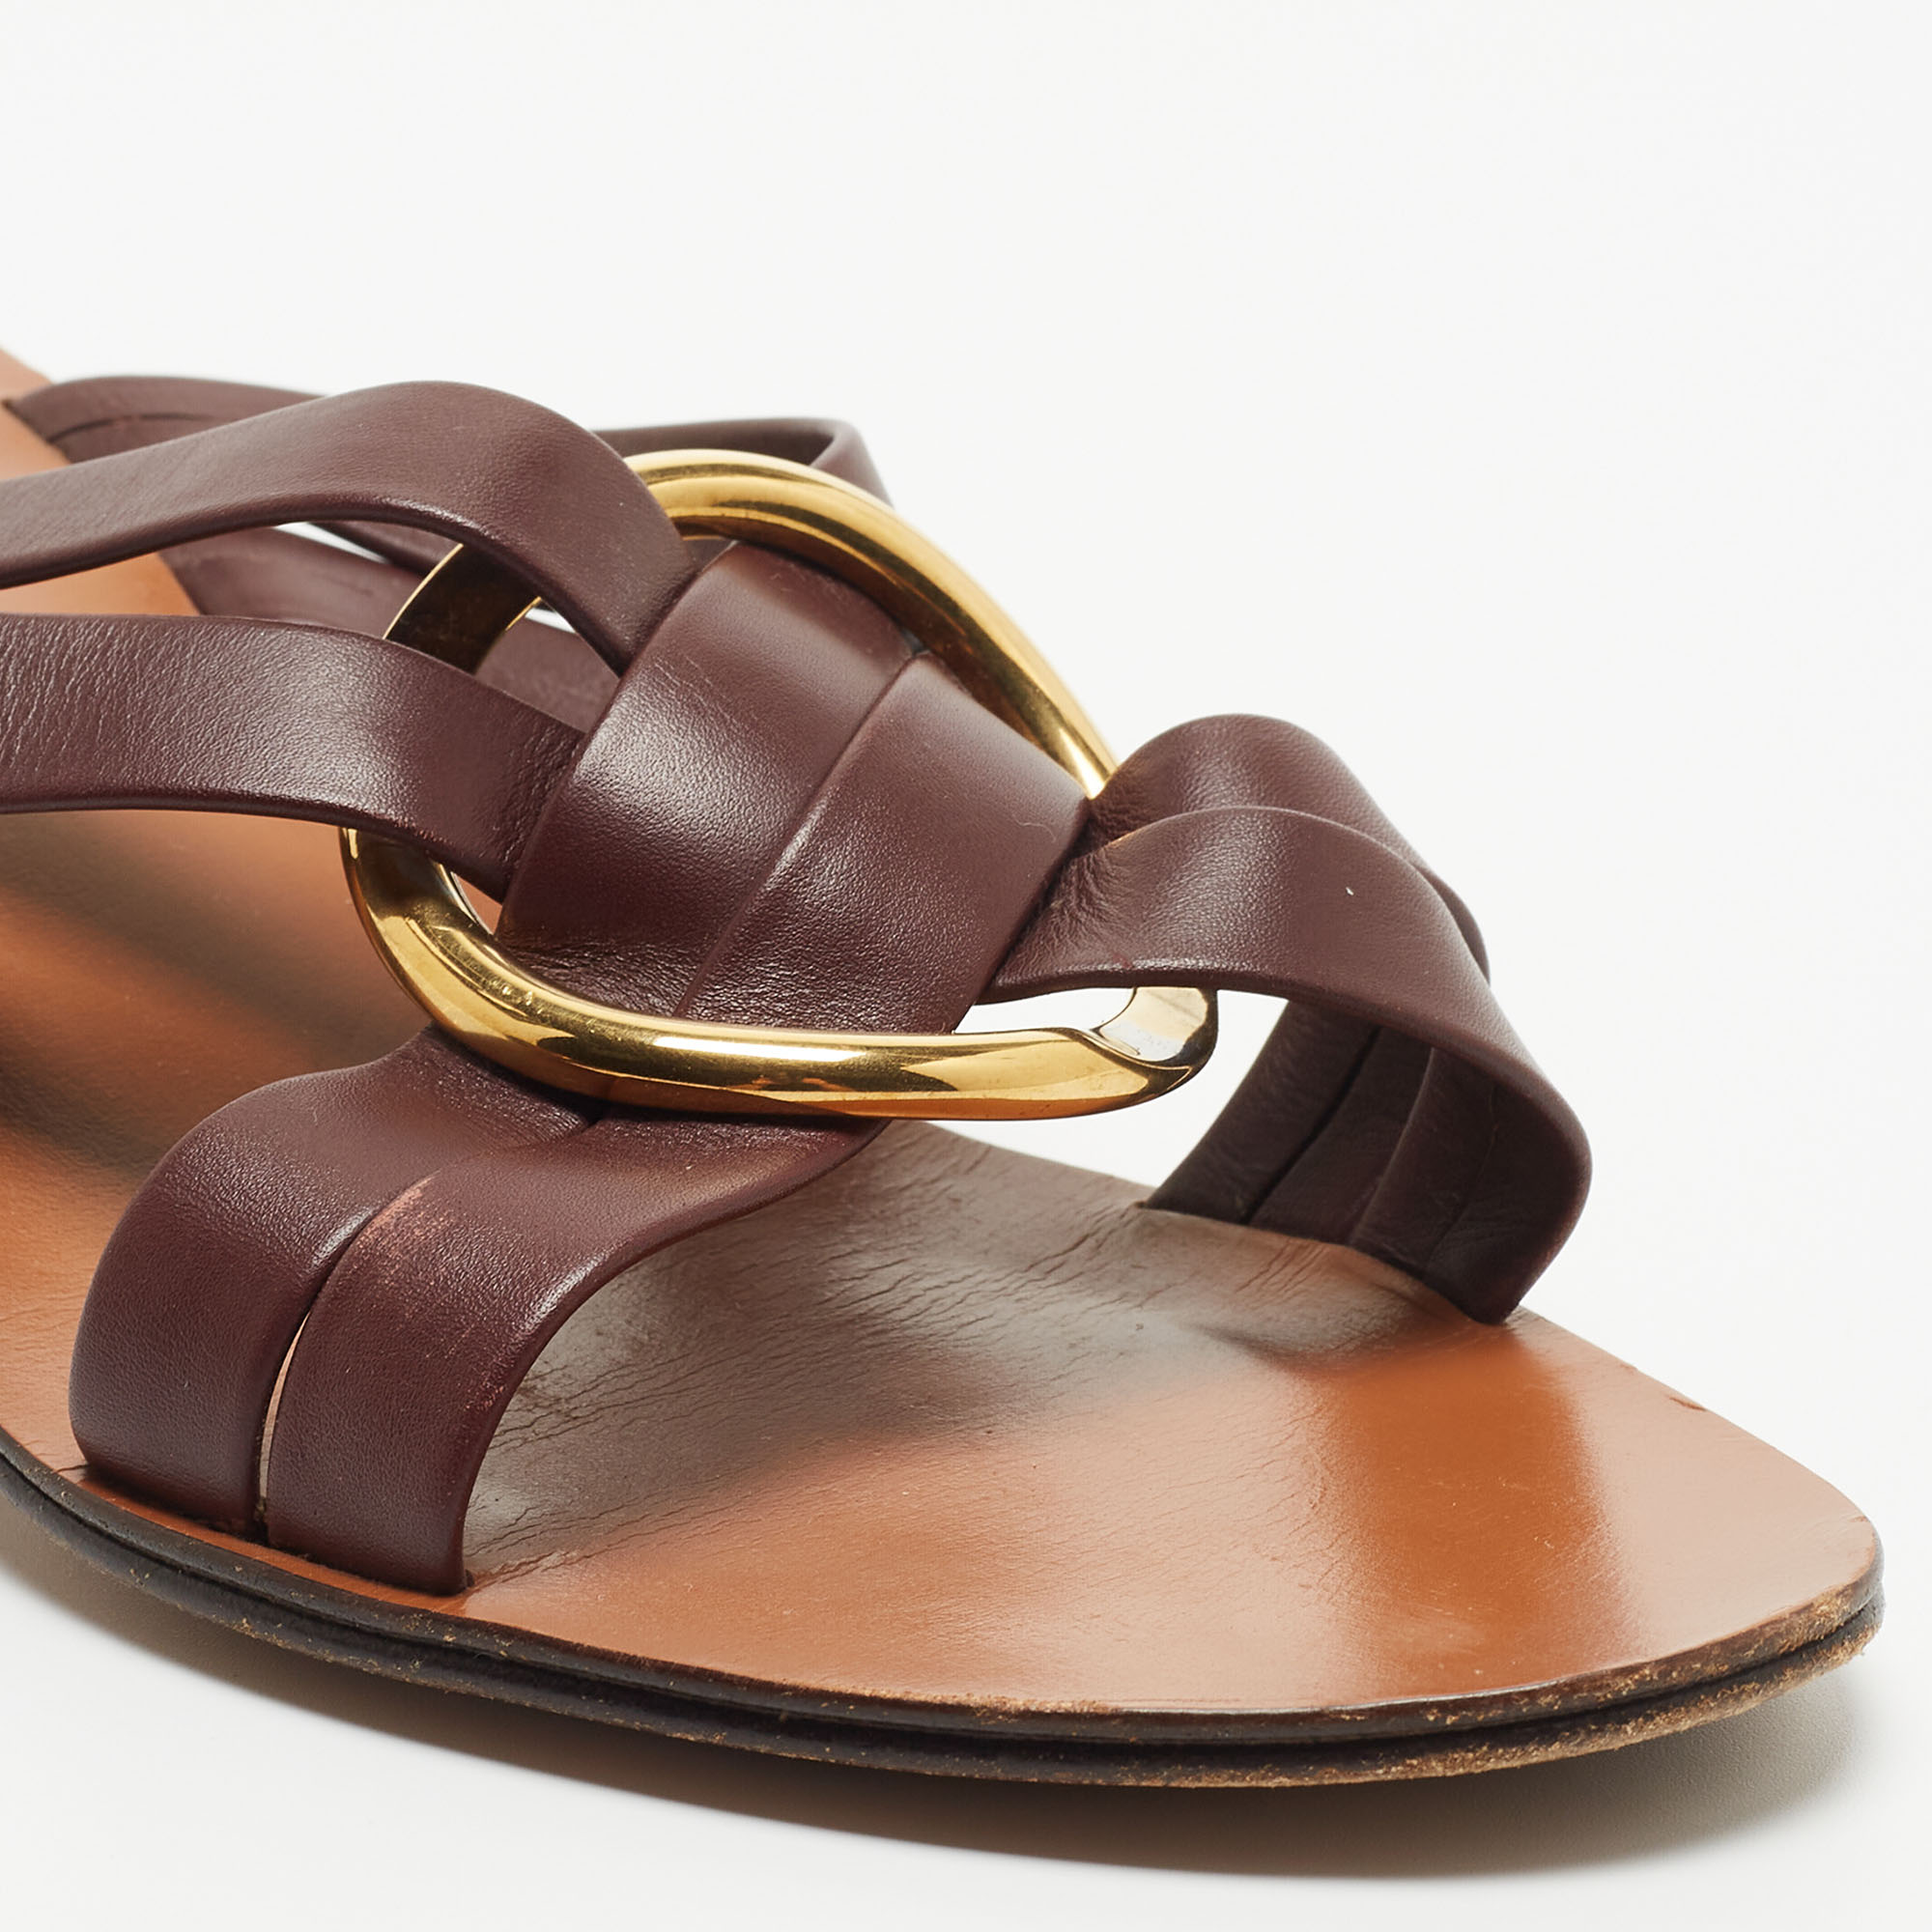 Chloe Burgundy Leather Rony Slide Sandals Size 39